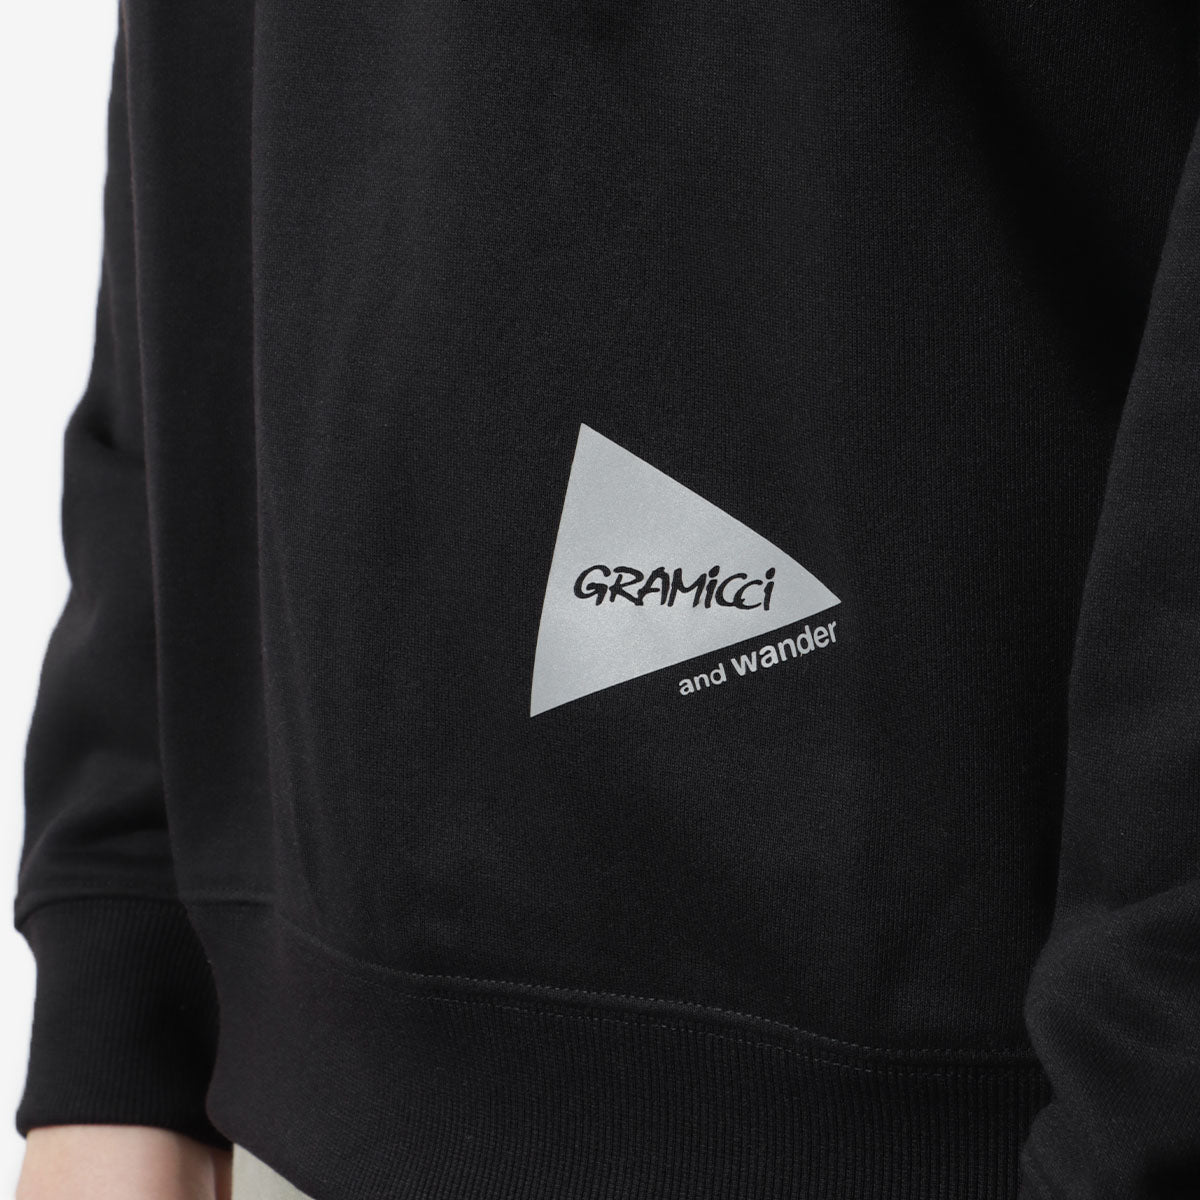 Gramicci x And Wander Pocket Sweatshirt, Black, Detail Shot 2